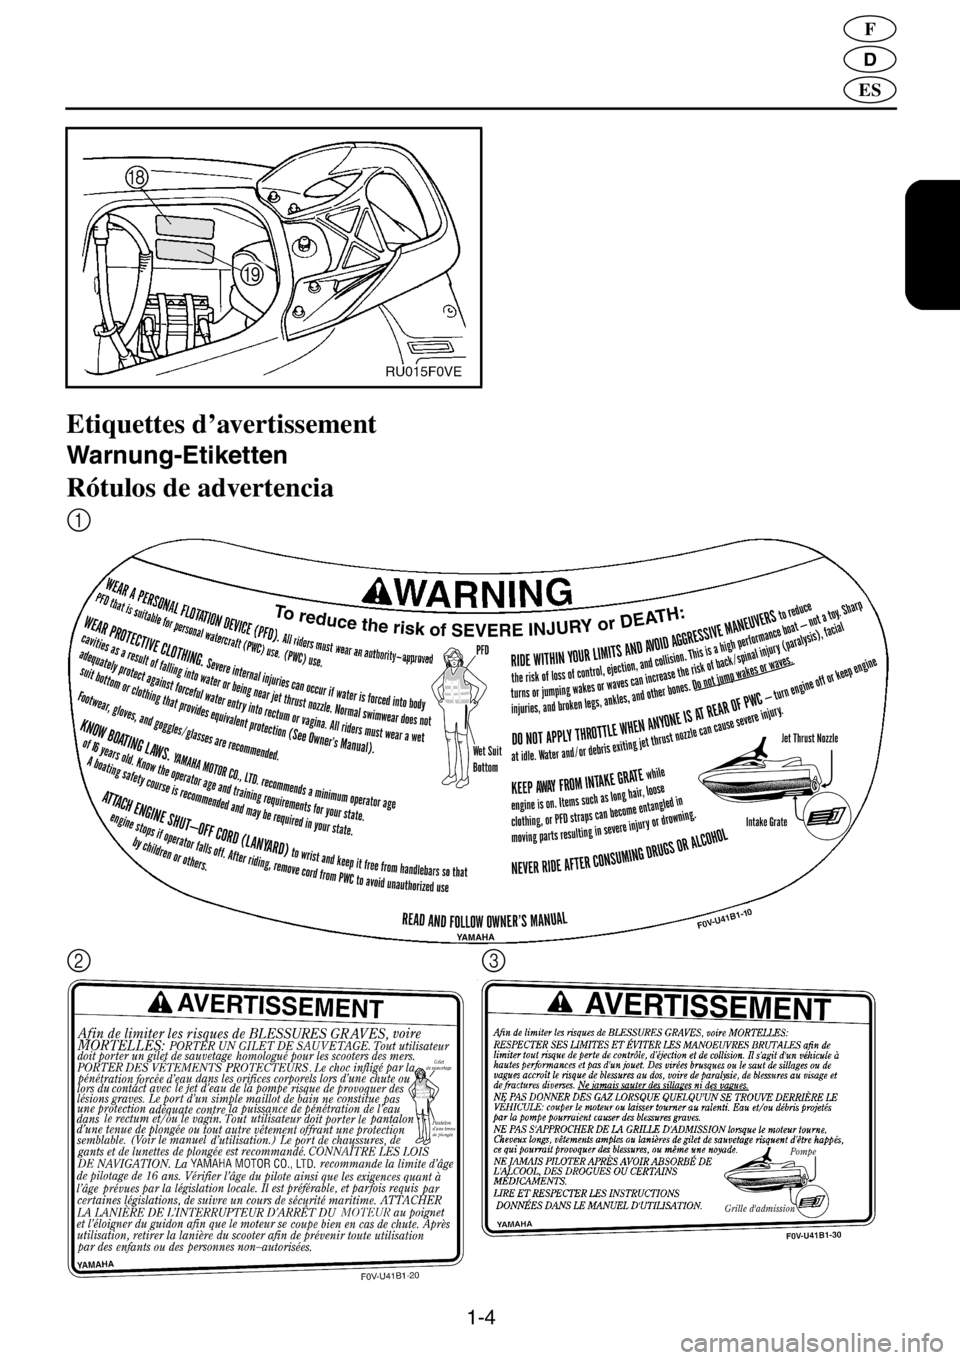 YAMAHA XL 1200 2001  Manuale de Empleo (in Spanish) 1-4
D
F
ES
Etiquettes d’avertissement 
Warnung-Etiketten 
Rótulos de advertencia 
1
23 